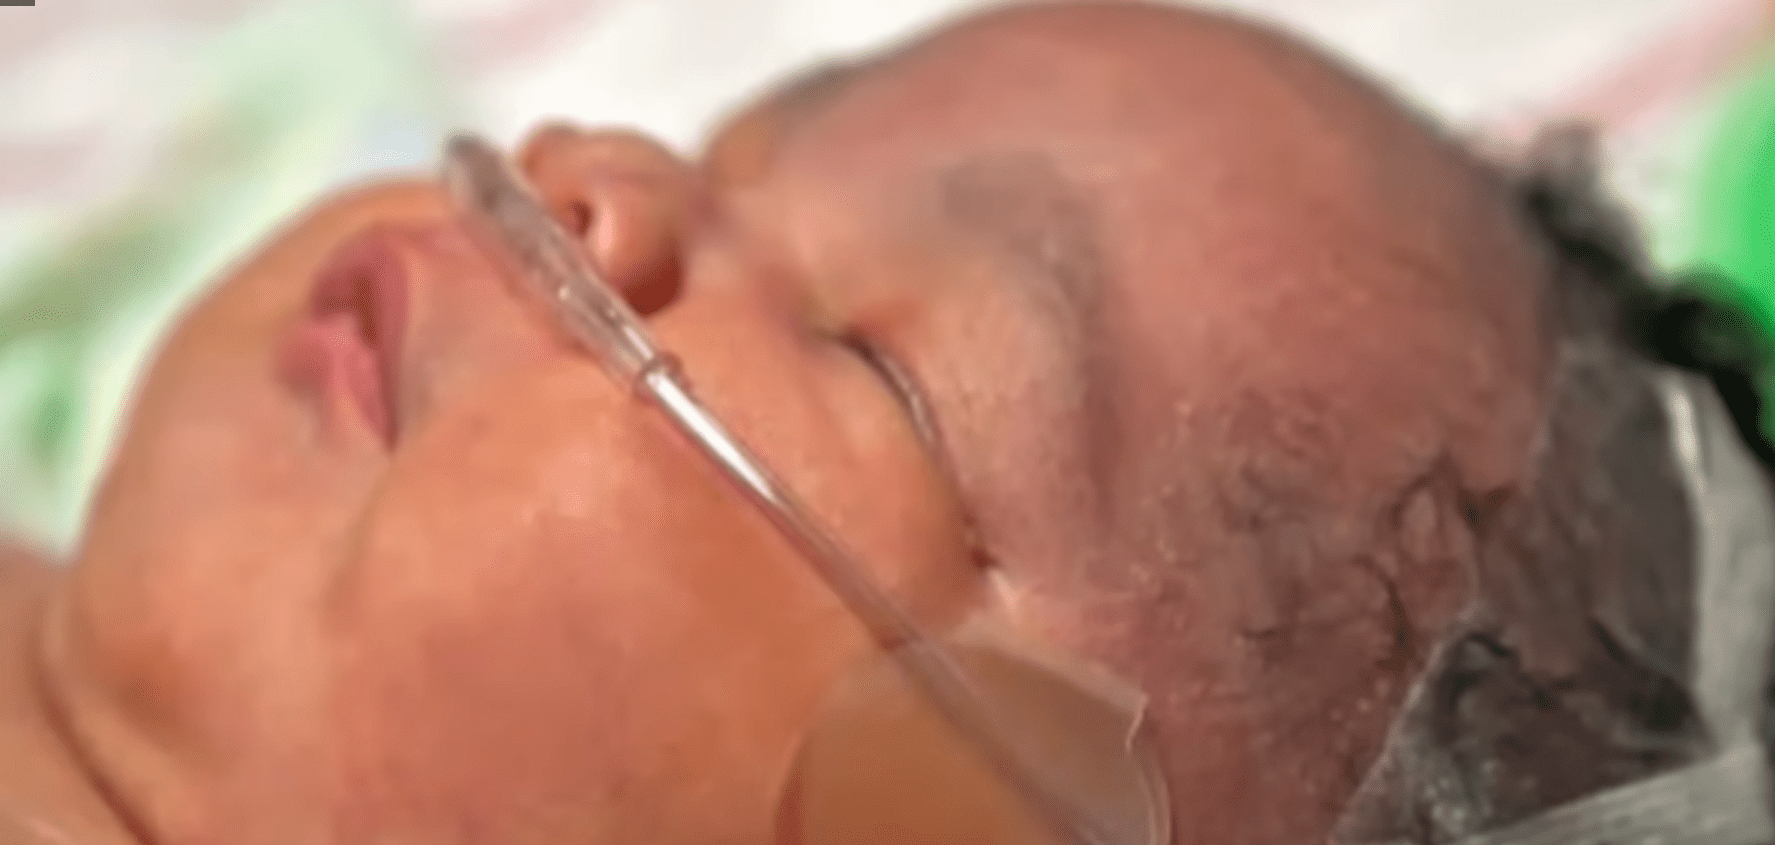 Robin Cyr’s newborn baby. | Source: youtube.com/The Next News Network